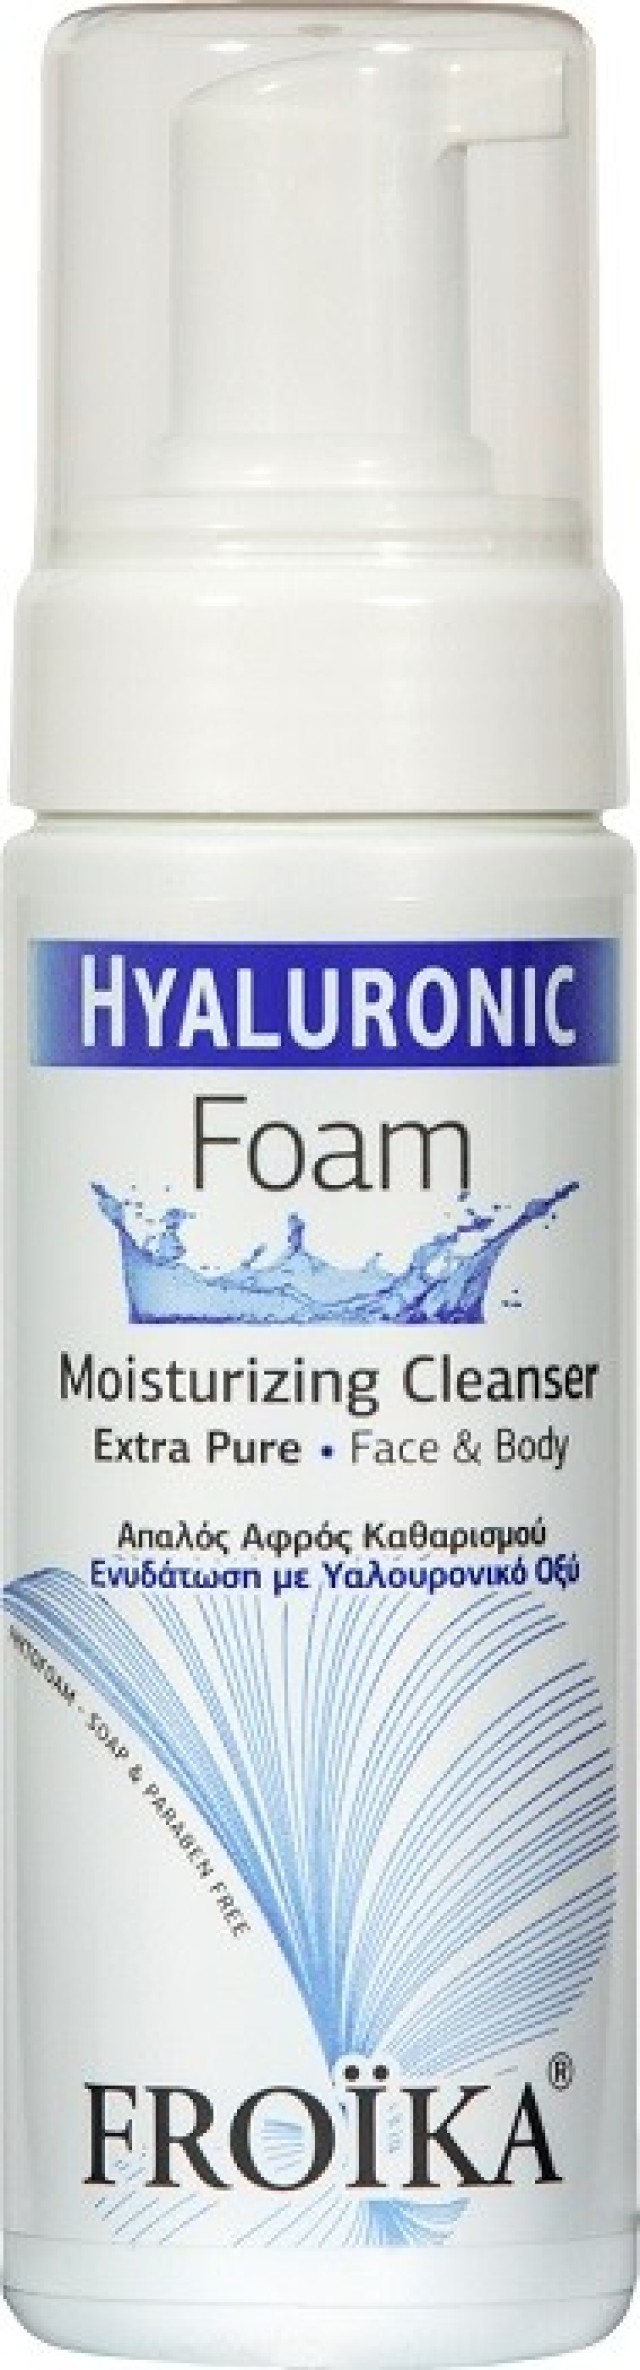 Froika Hyaluronic Foam Ενυδατικός Αφρός Καθαρισμού & Ντεμακιγιάζ 150ml